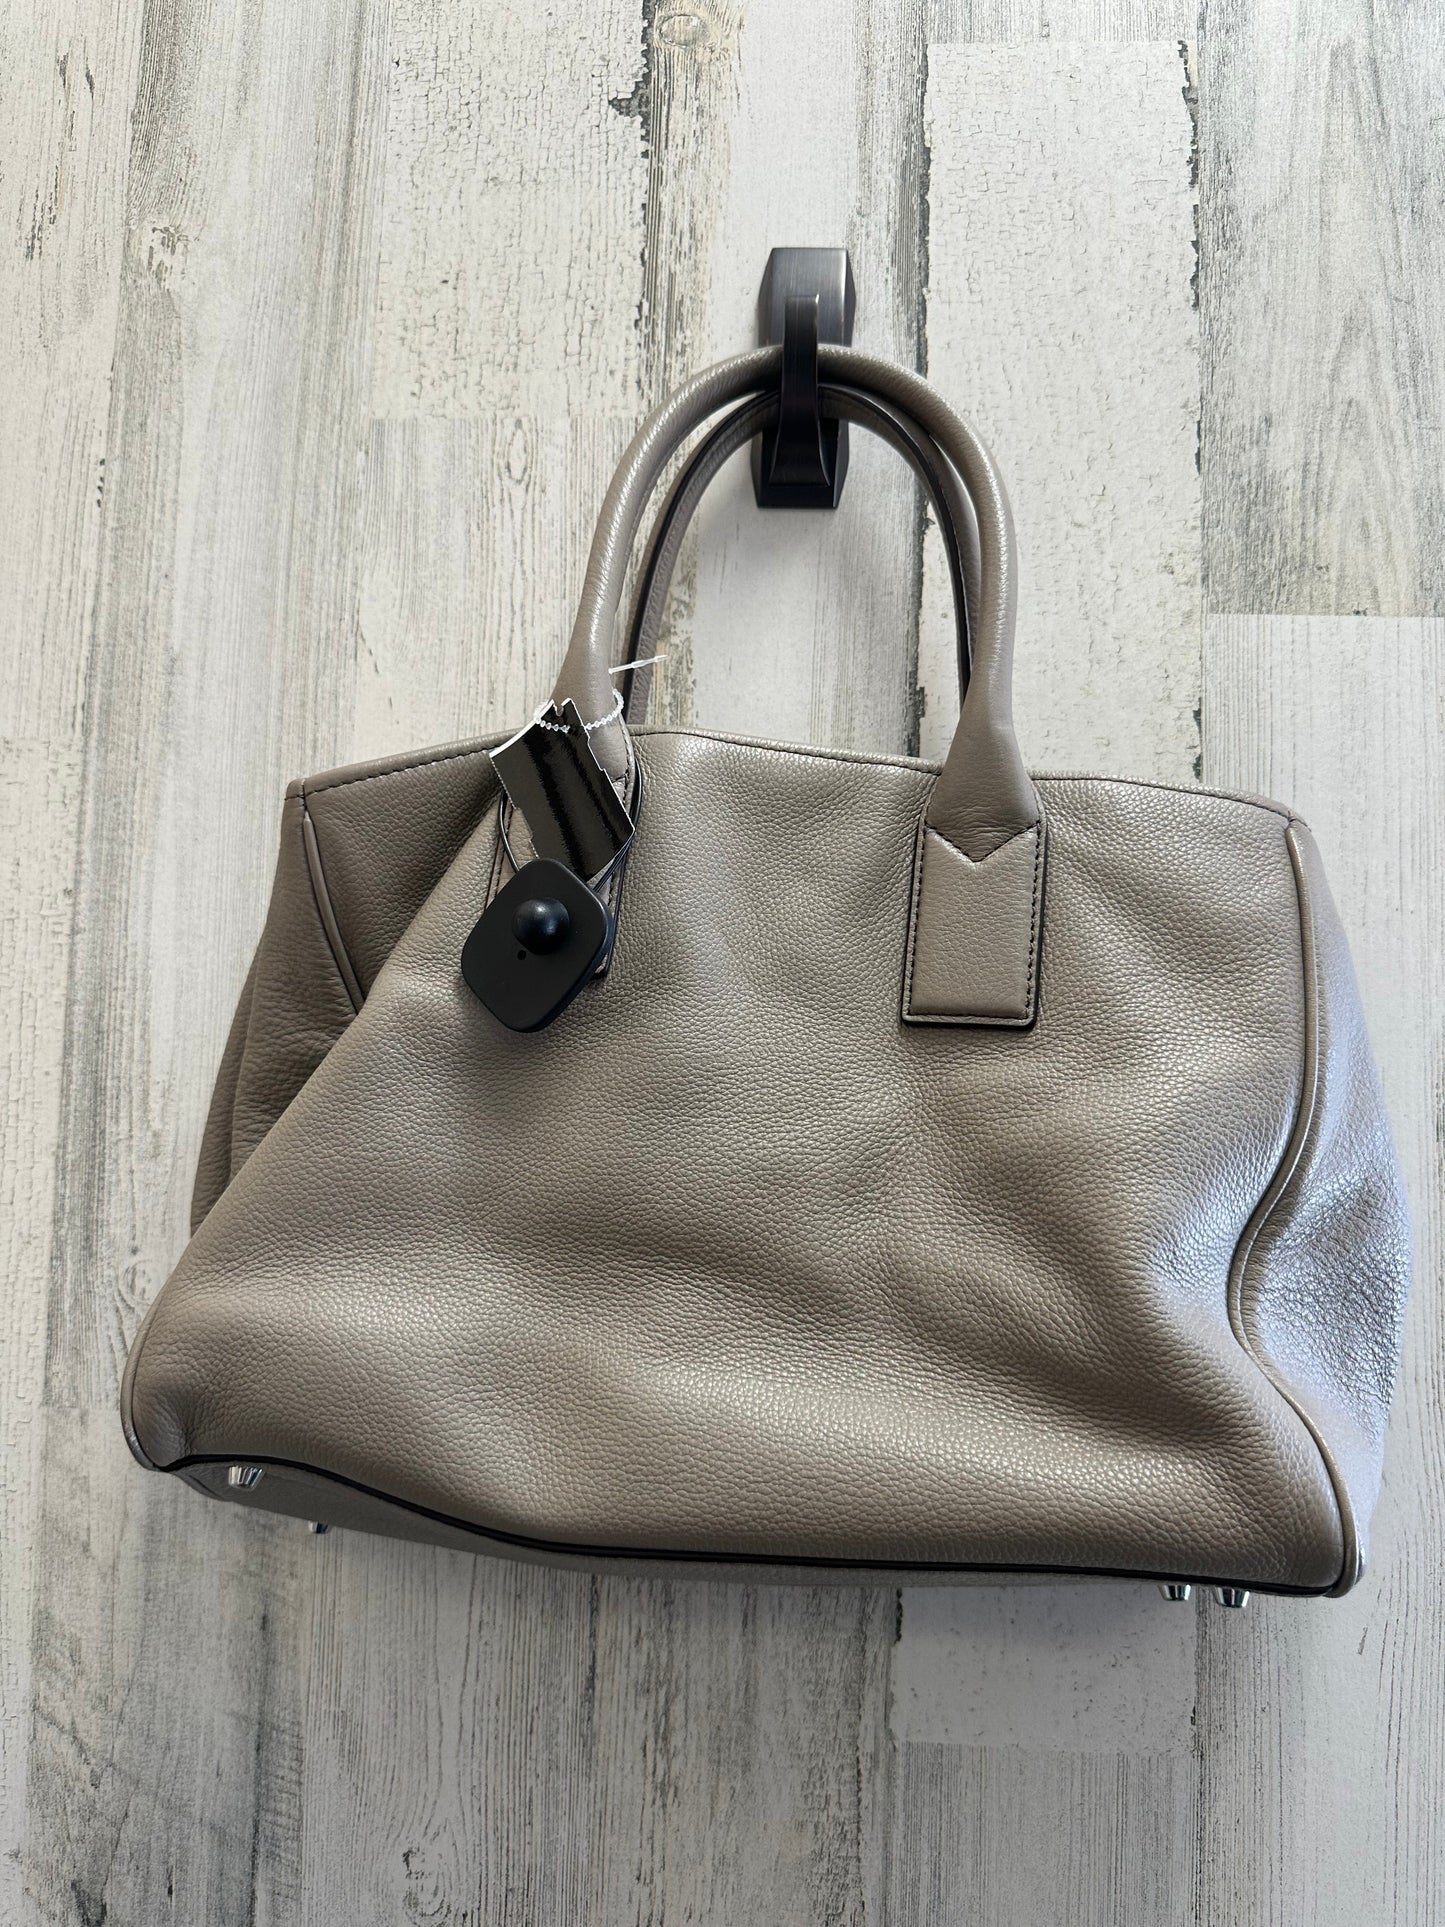 Handbag Designer Marc Jacobs, Size Medium